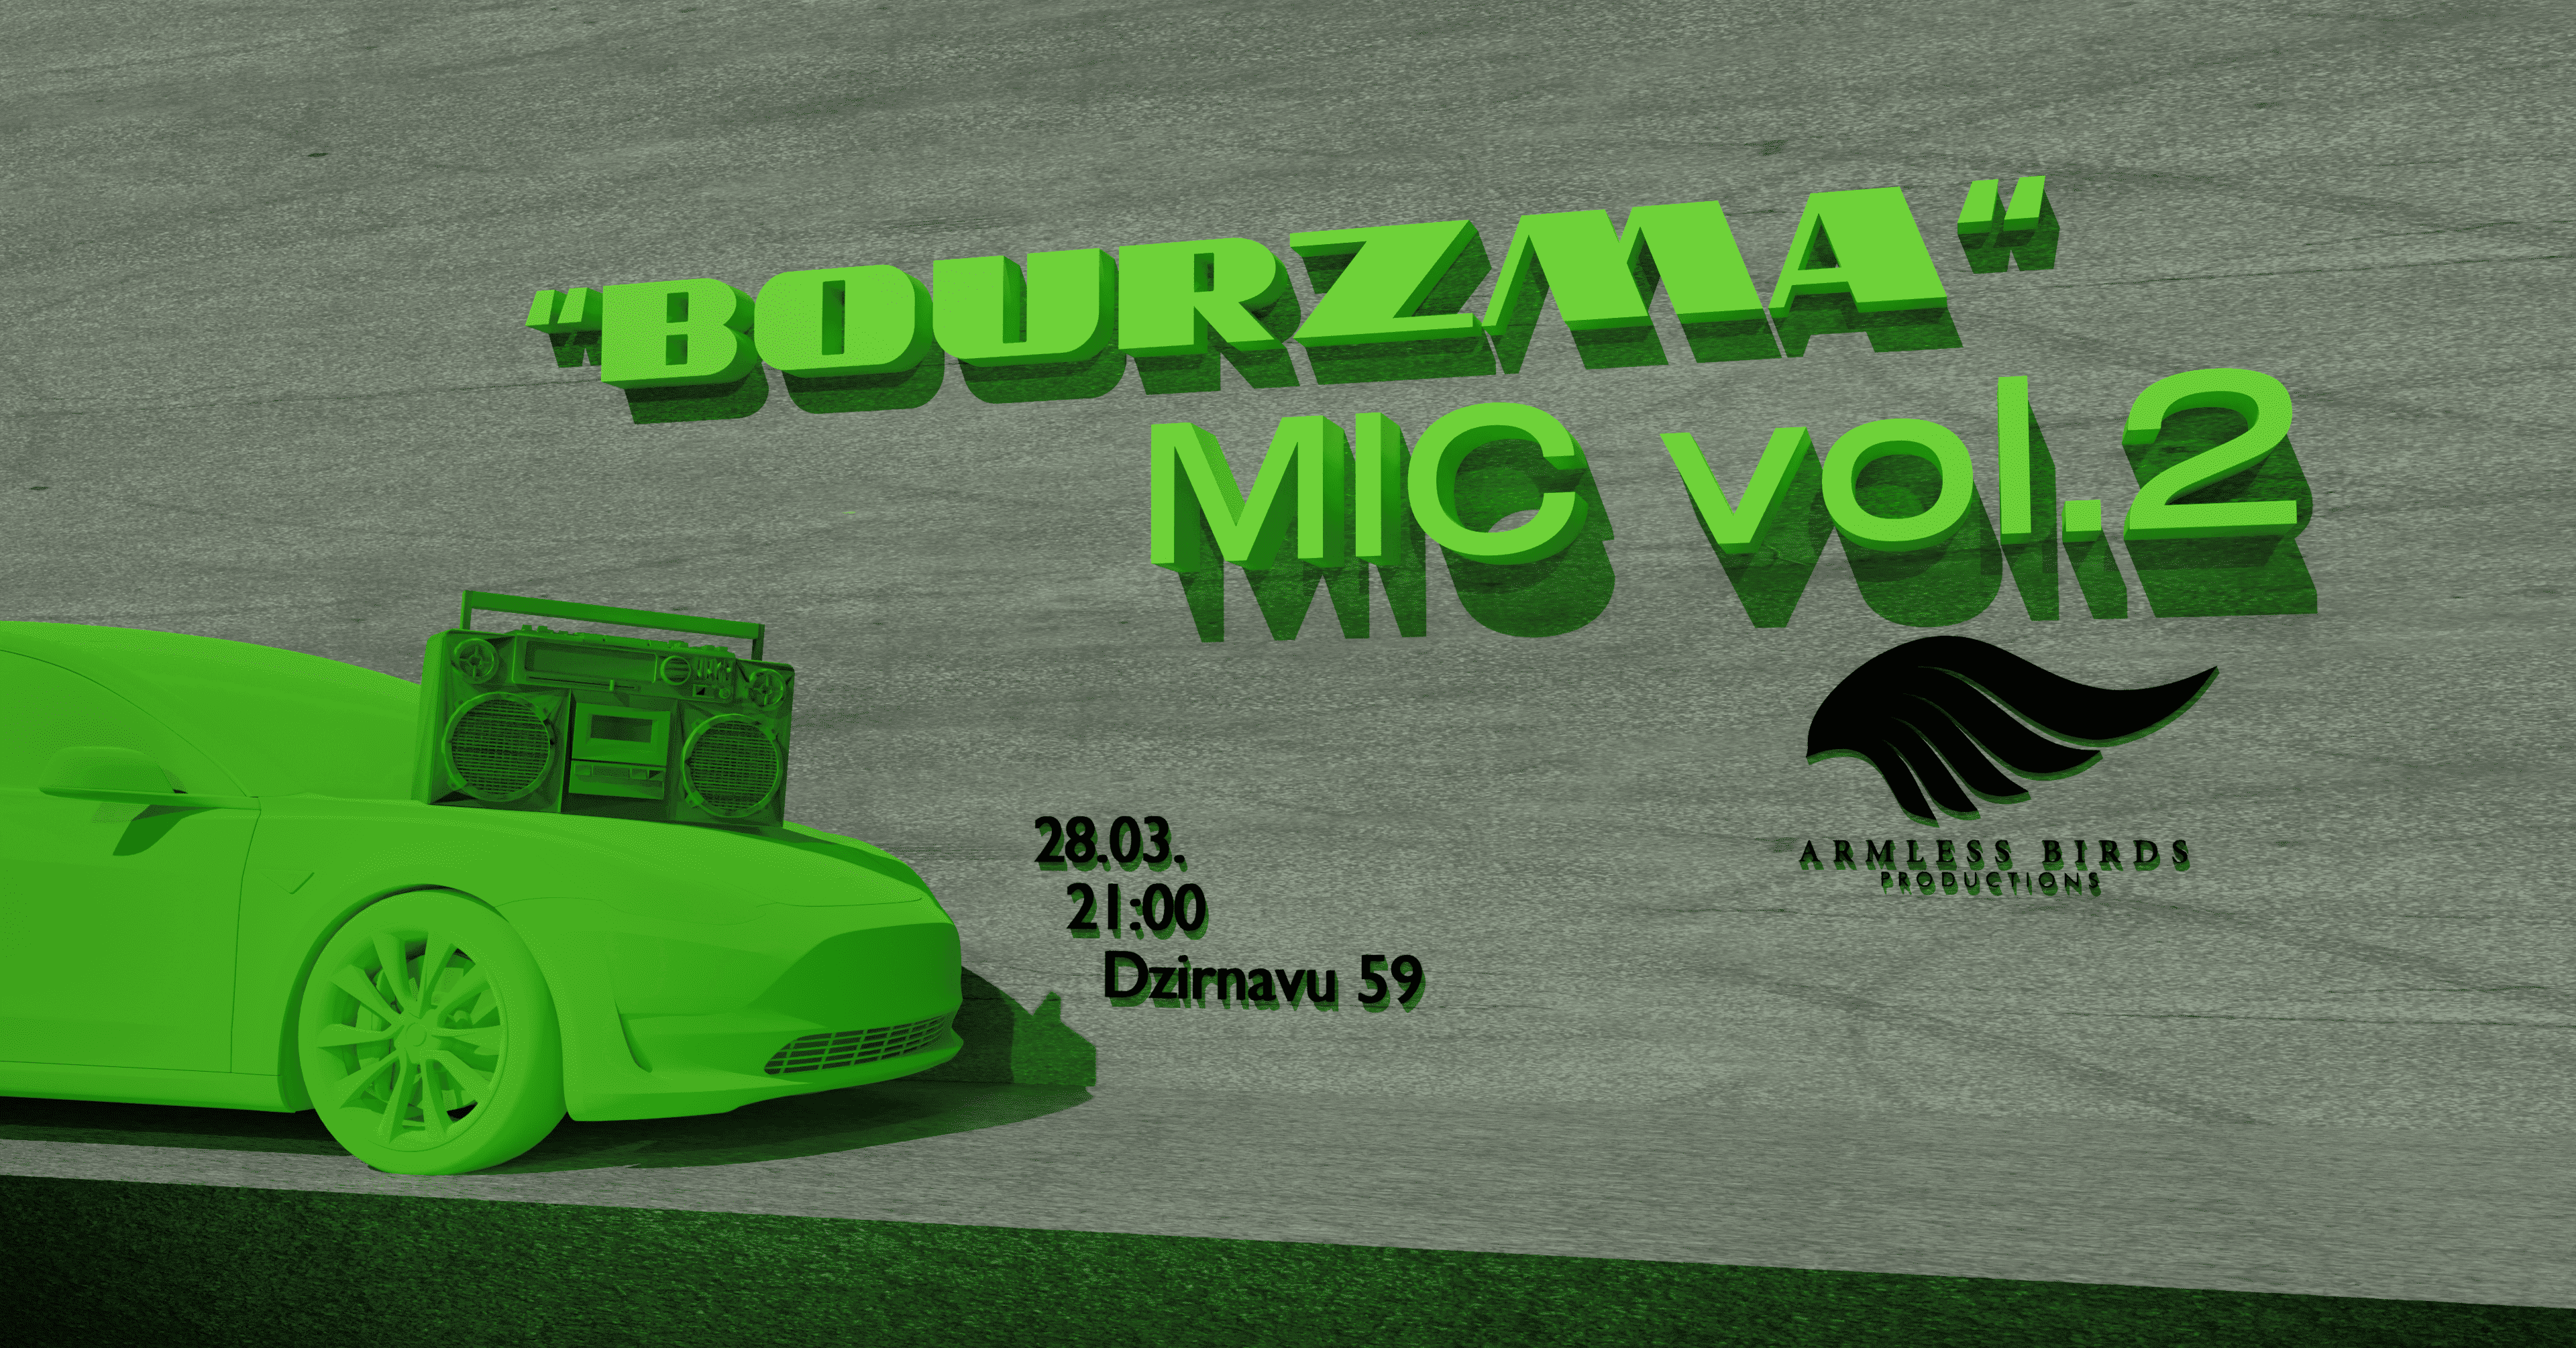 Bourzma MIC vol.2 - フライヤー表